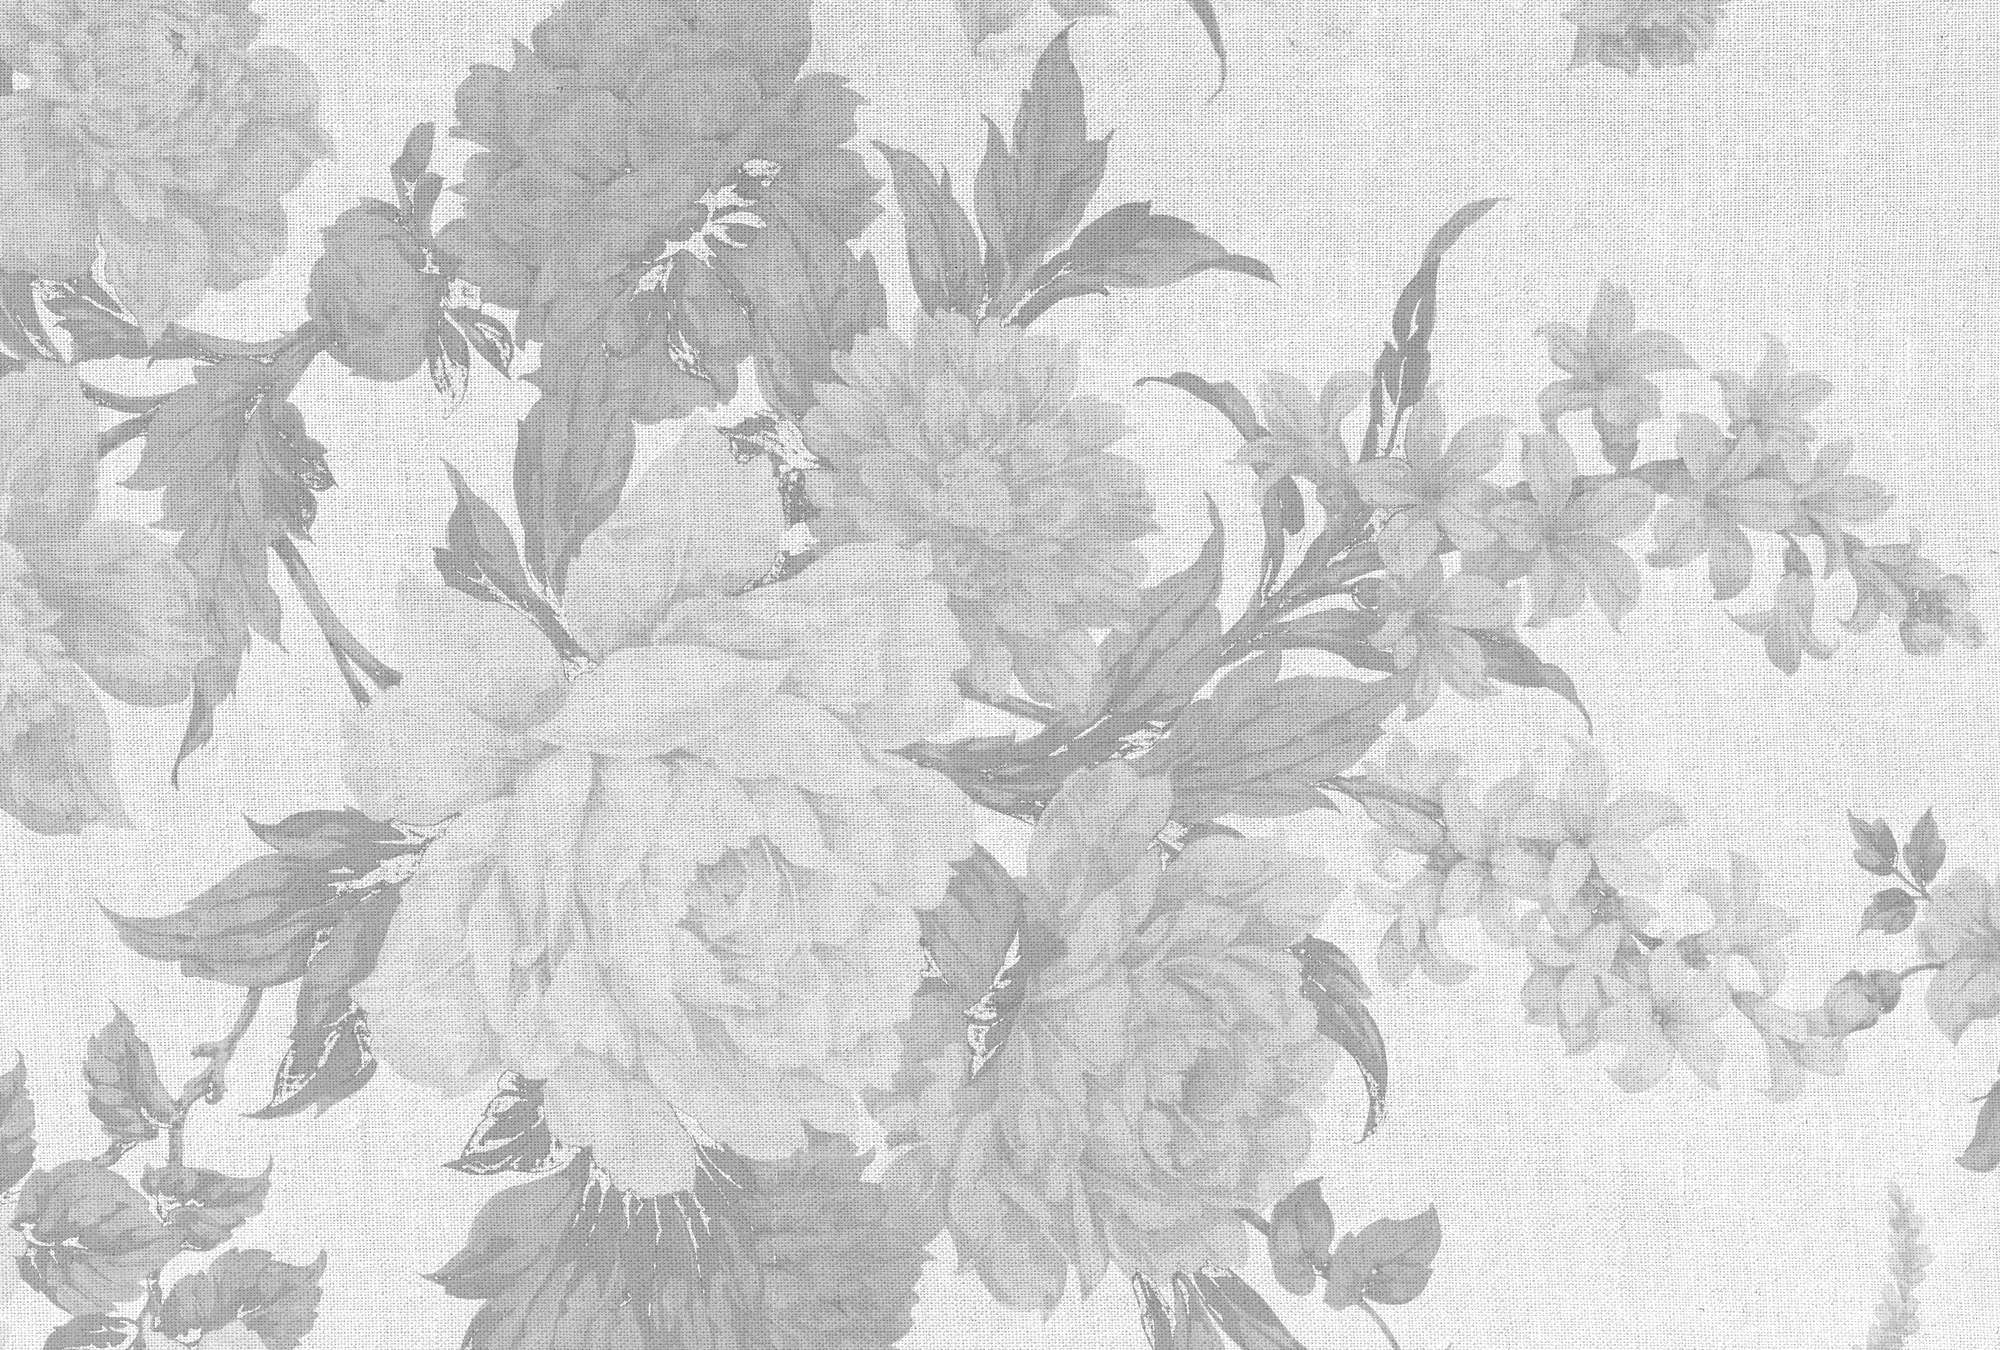             Fototapete mit Rosen Motiv in Textiloptik – Grau, Weiß
        